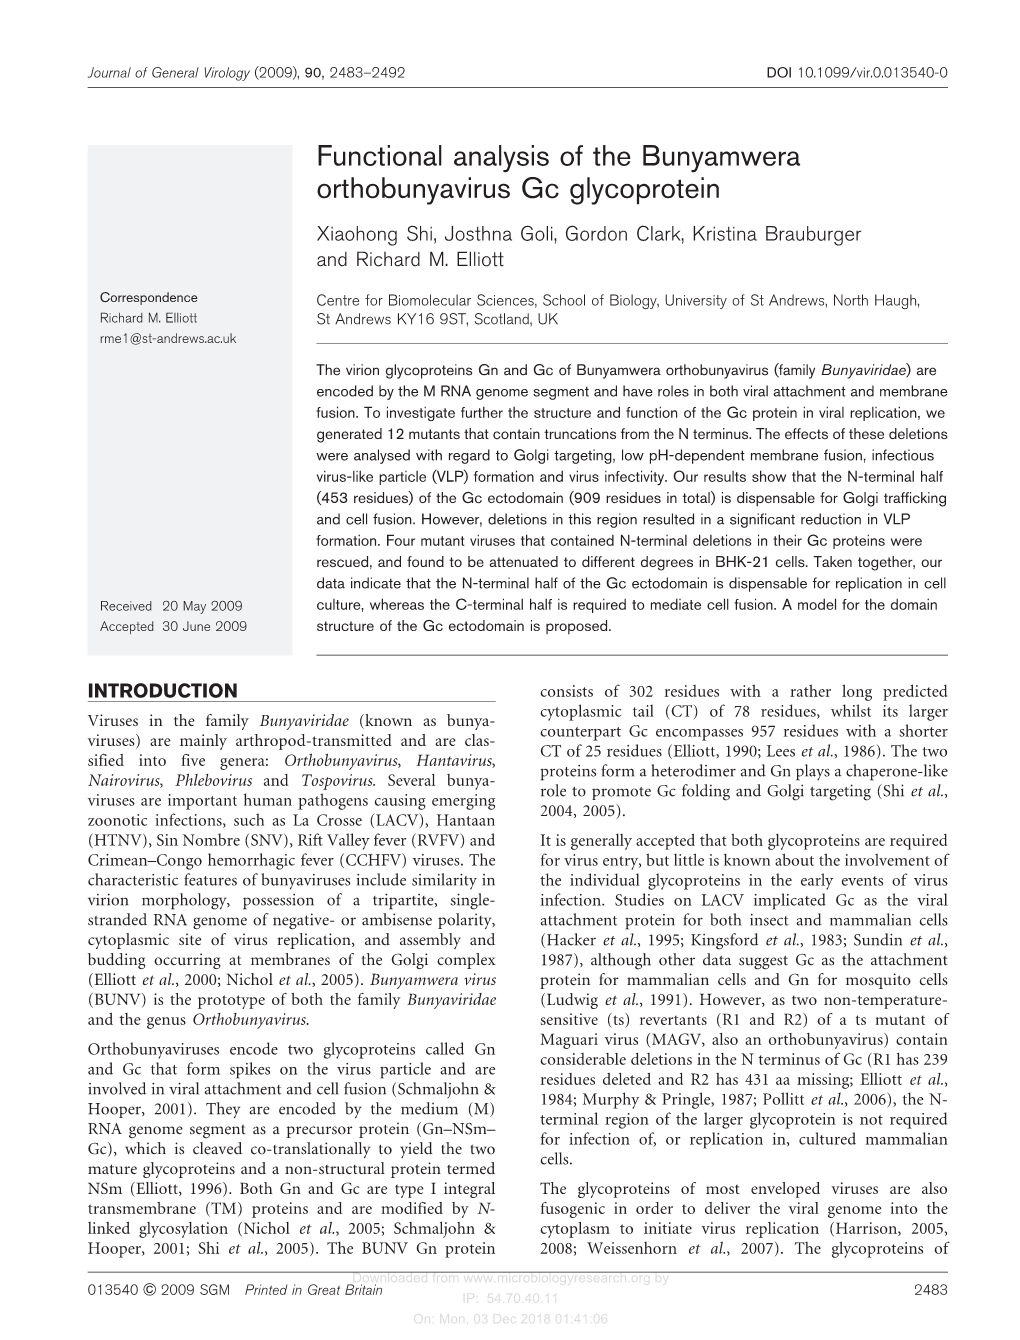 Functional Analysis of the Bunyamwera Orthobunyavirus Gc Glycoprotein